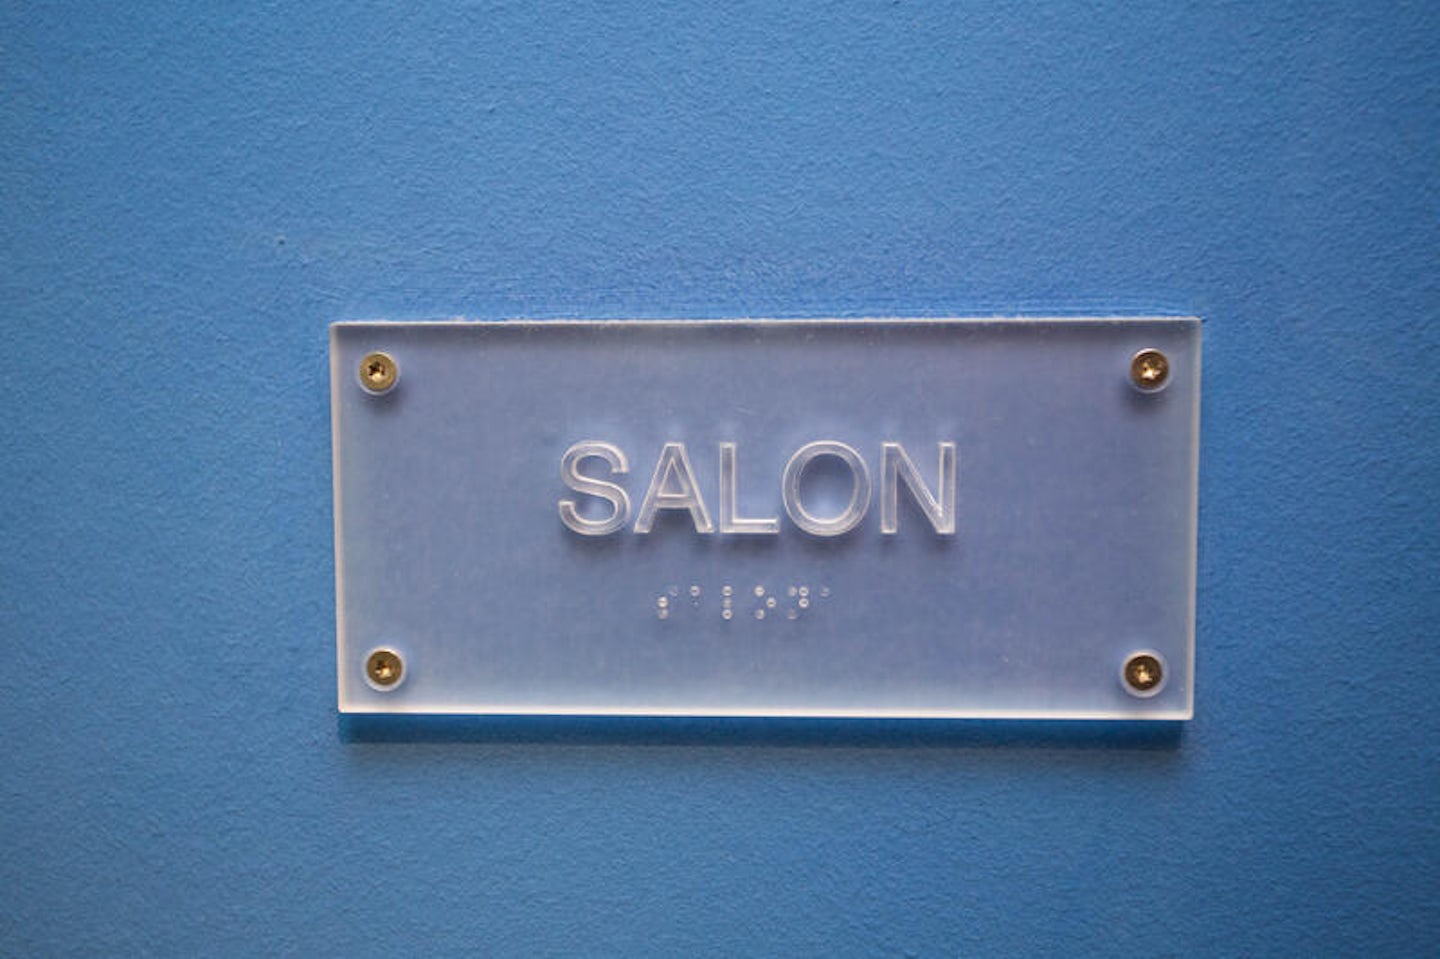 Salon on Celebrity Solstice